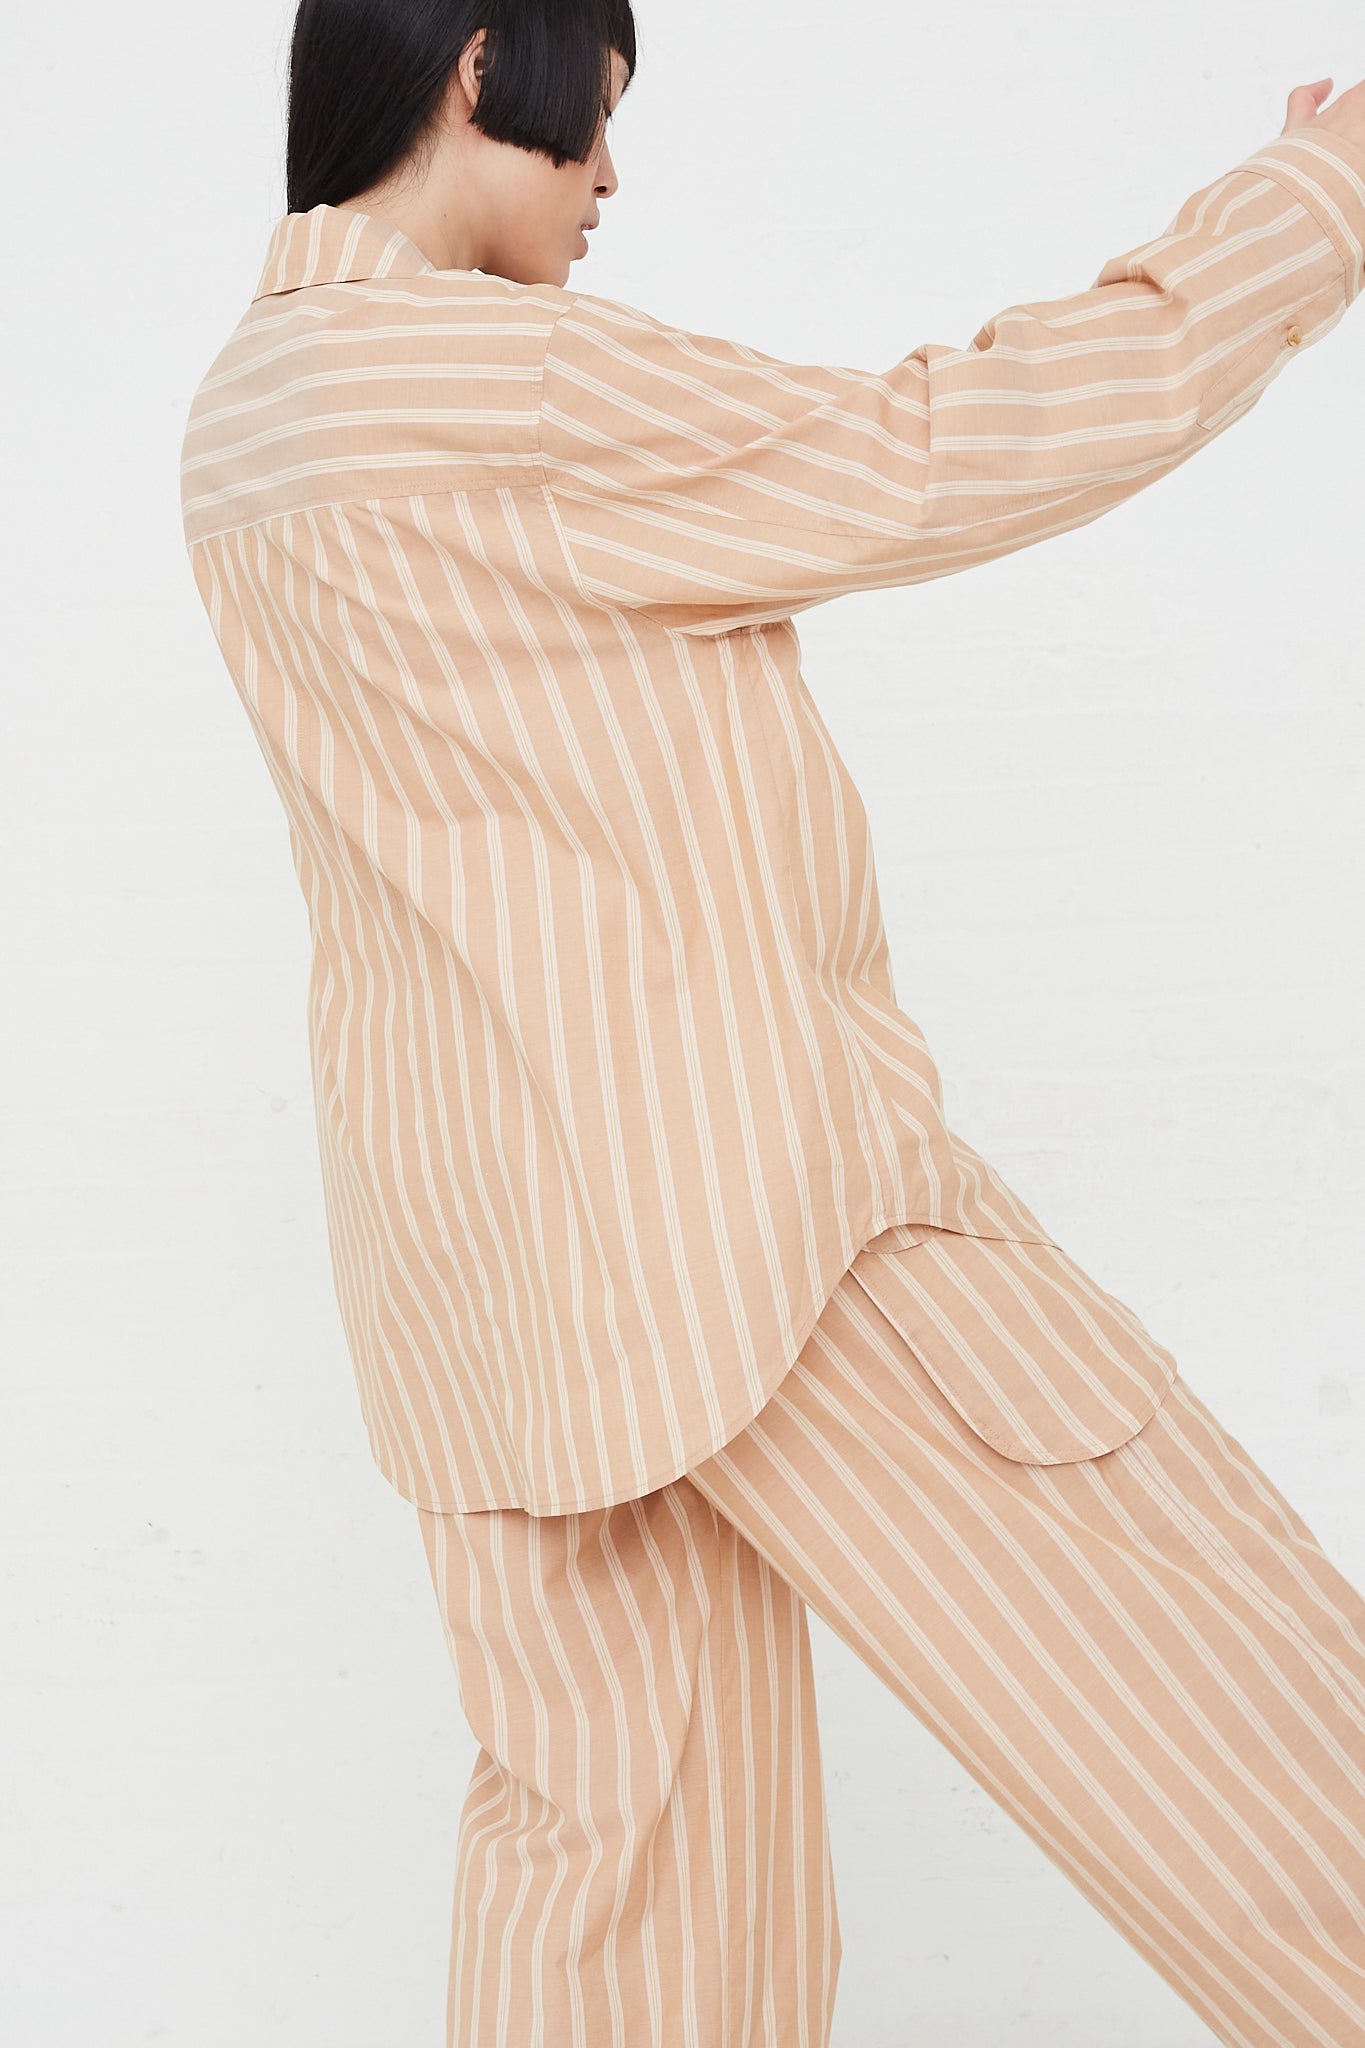 REJINA PYO - Caprice Cotton Shirt in Stripe Pink | Oroboro Store